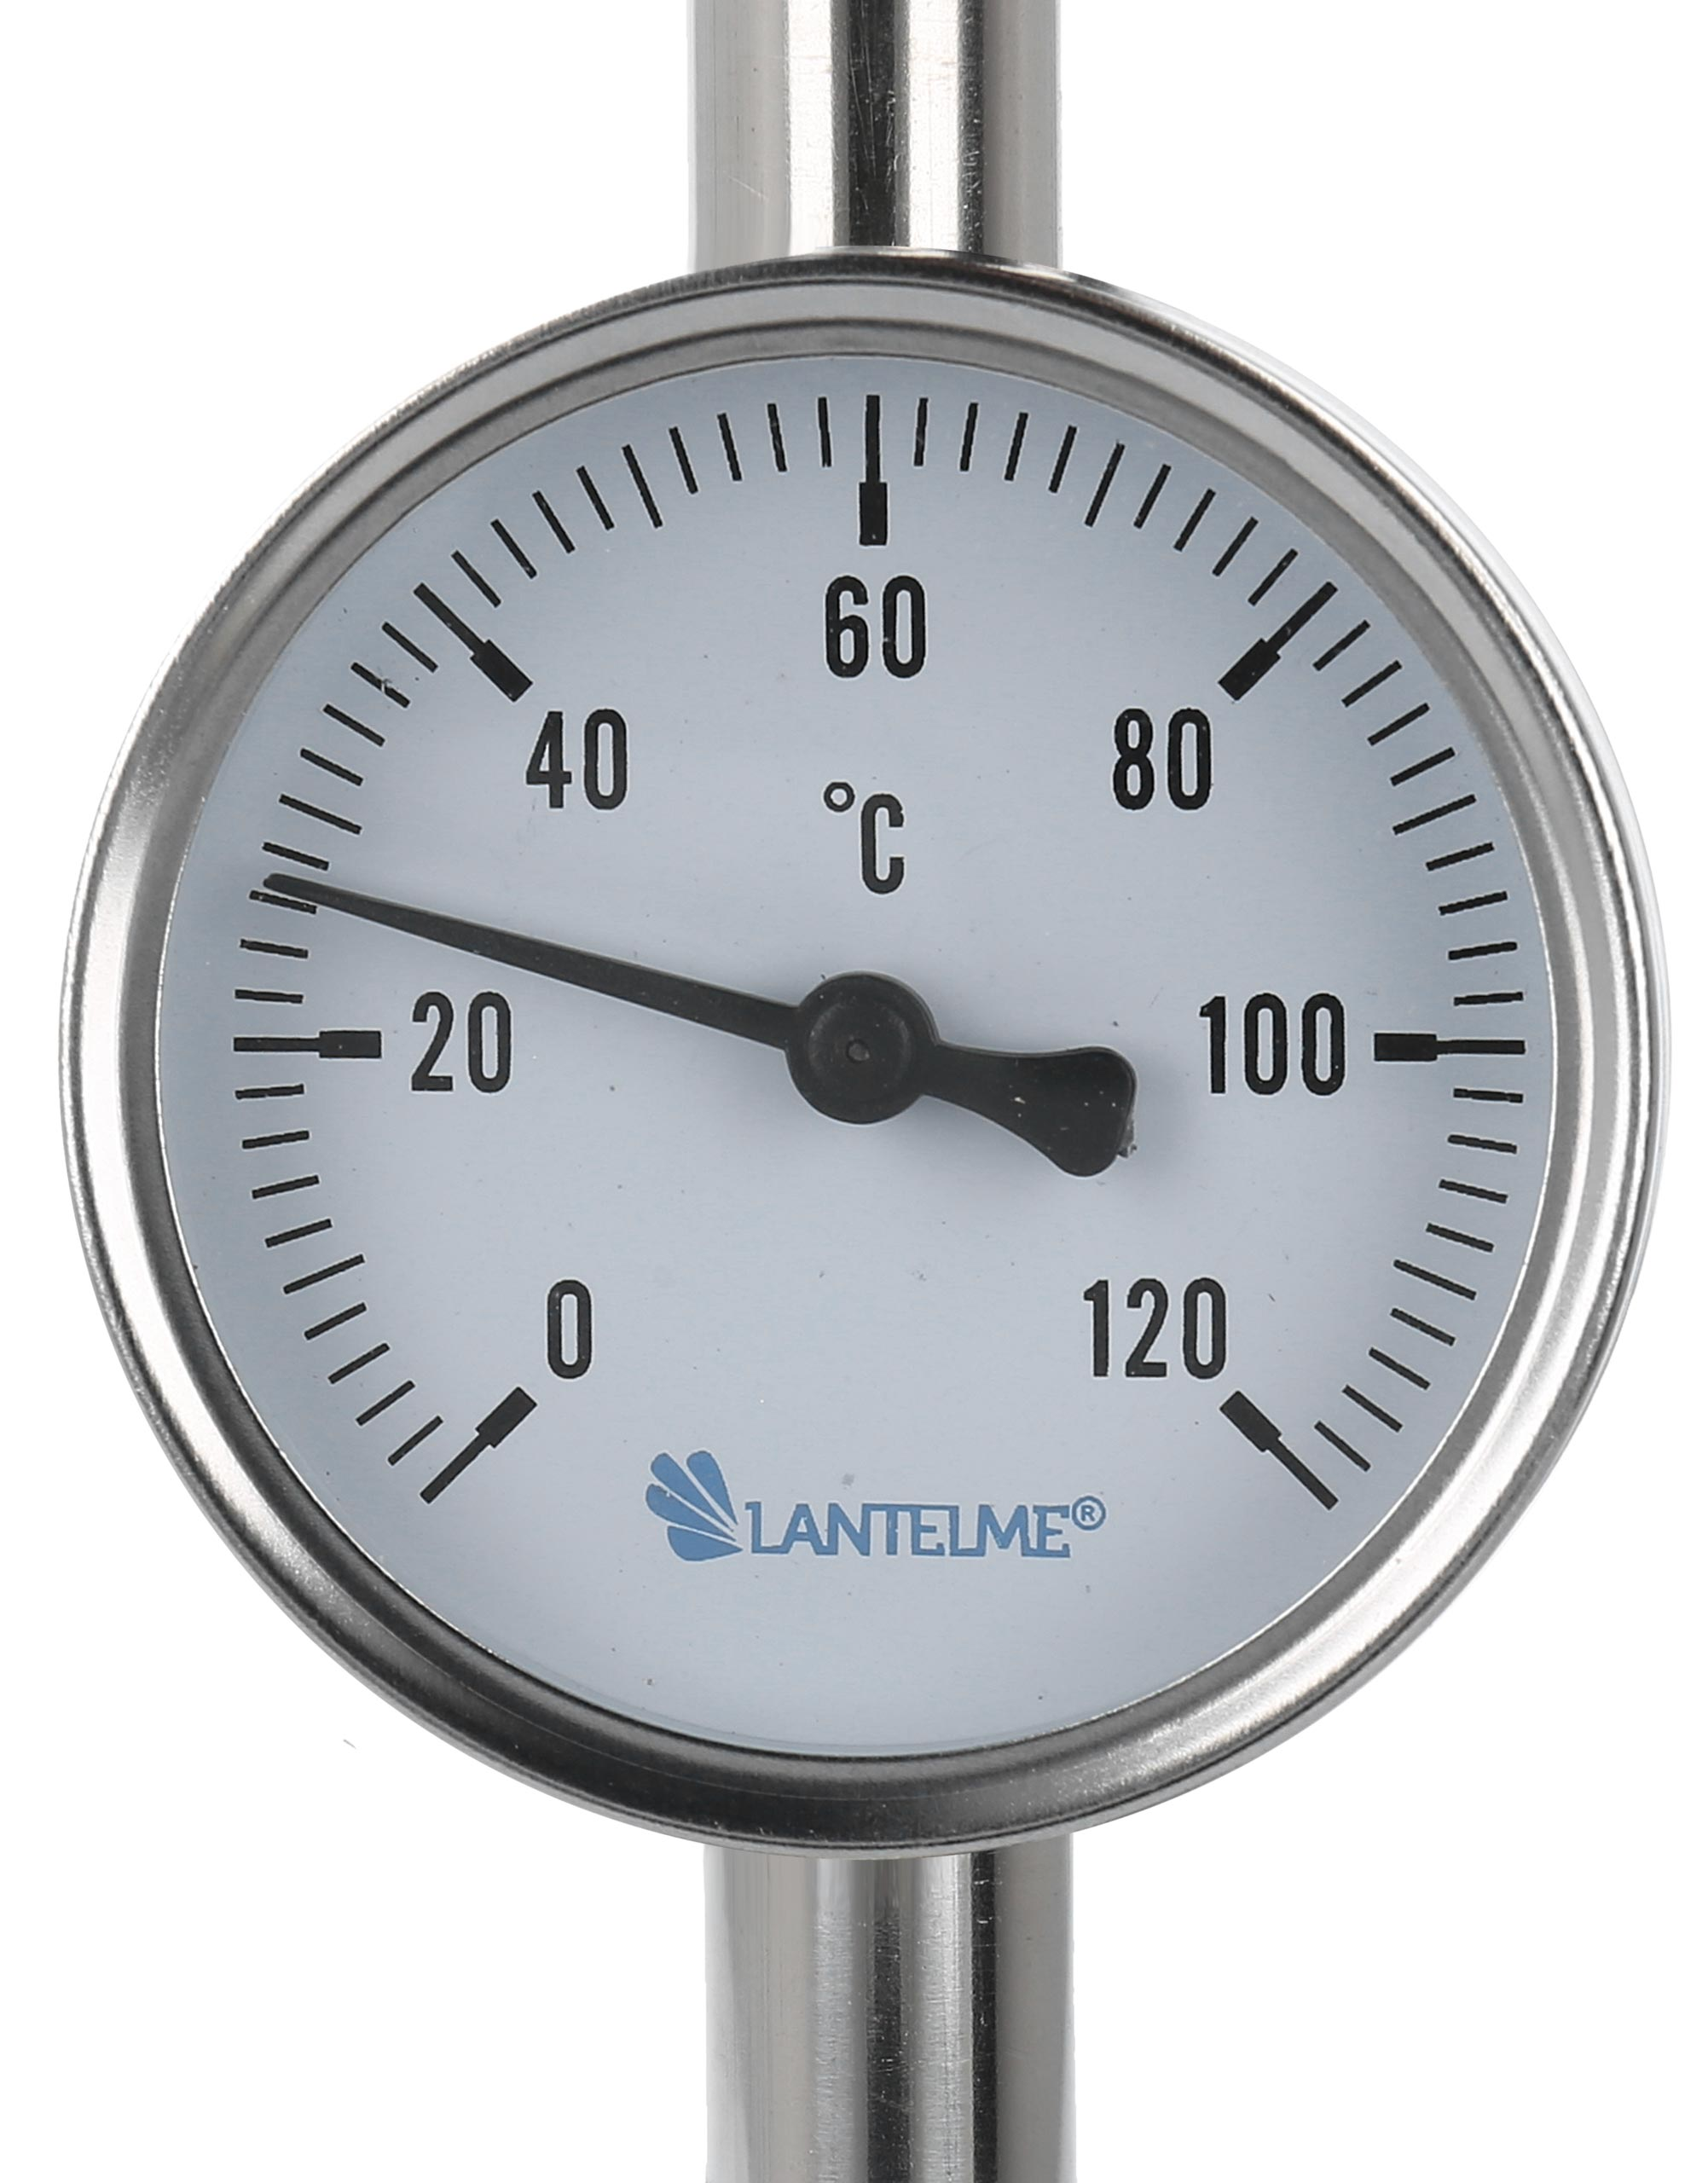 LANTELME 1 Stück Bimetall Anlege Thermometer